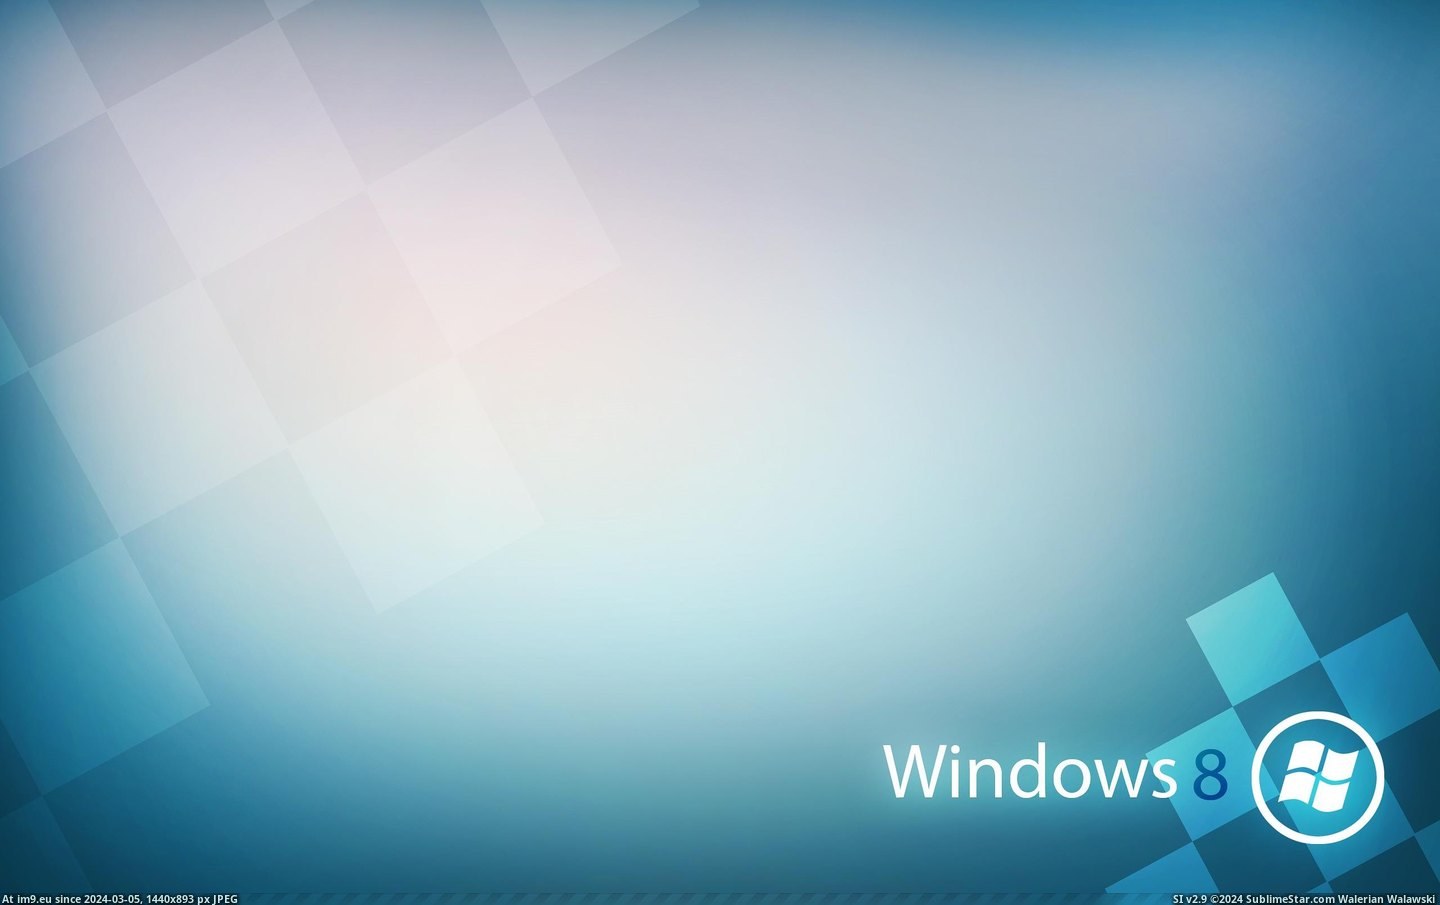 #Wallpaper #Windows #Metro #Wide Windows 8 Metro Wide HD Wallpaper Pic. (Bild von album Unique HD Wallpapers))